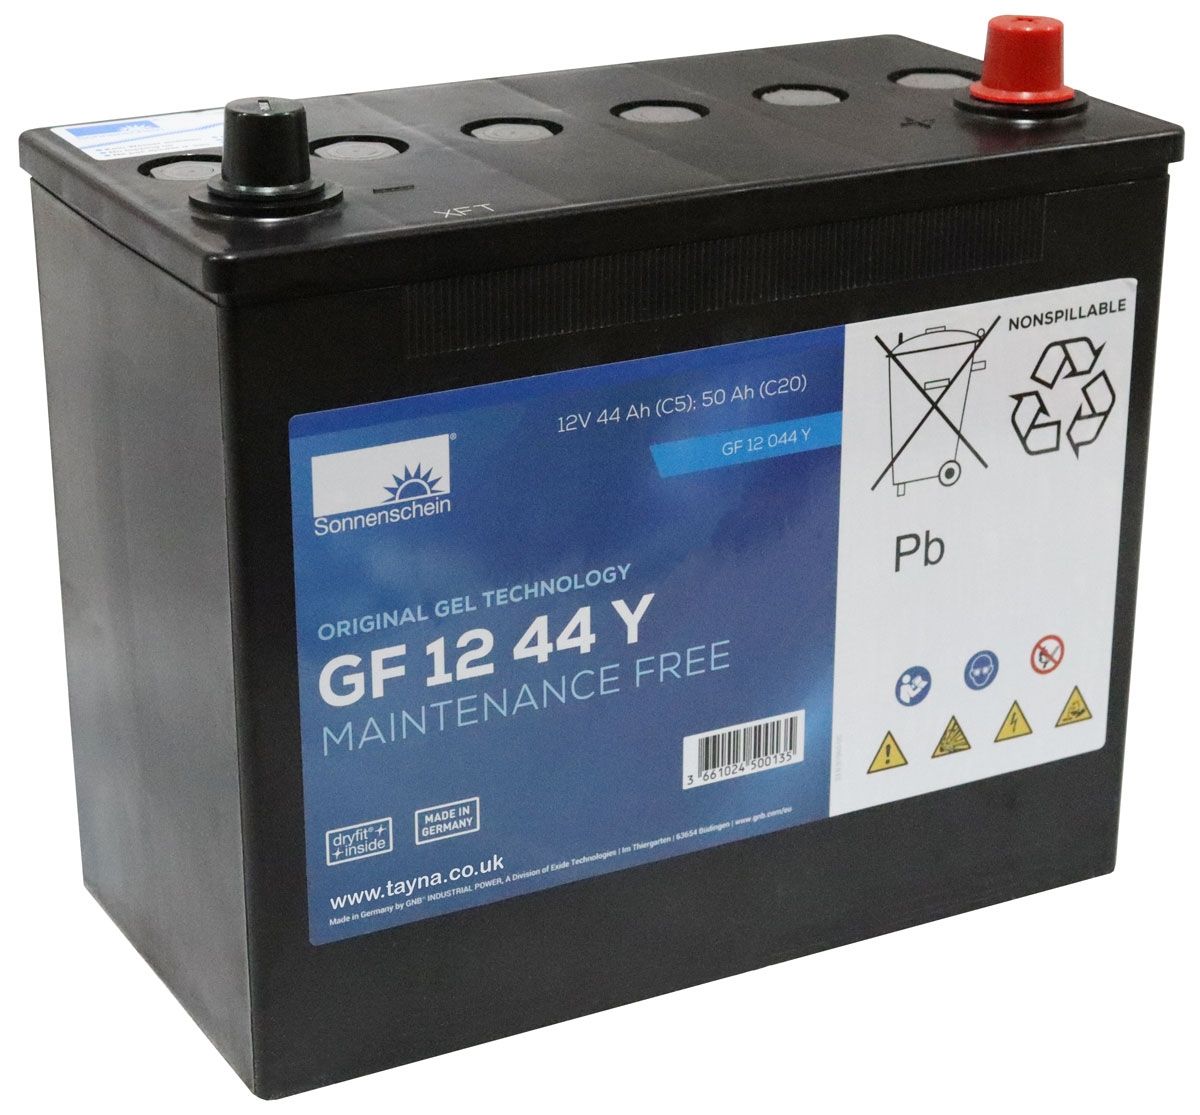 Information spiselige Tutor GF12044Y Sonnenschein Battery (GF1244Y / GF 12 44 Y)